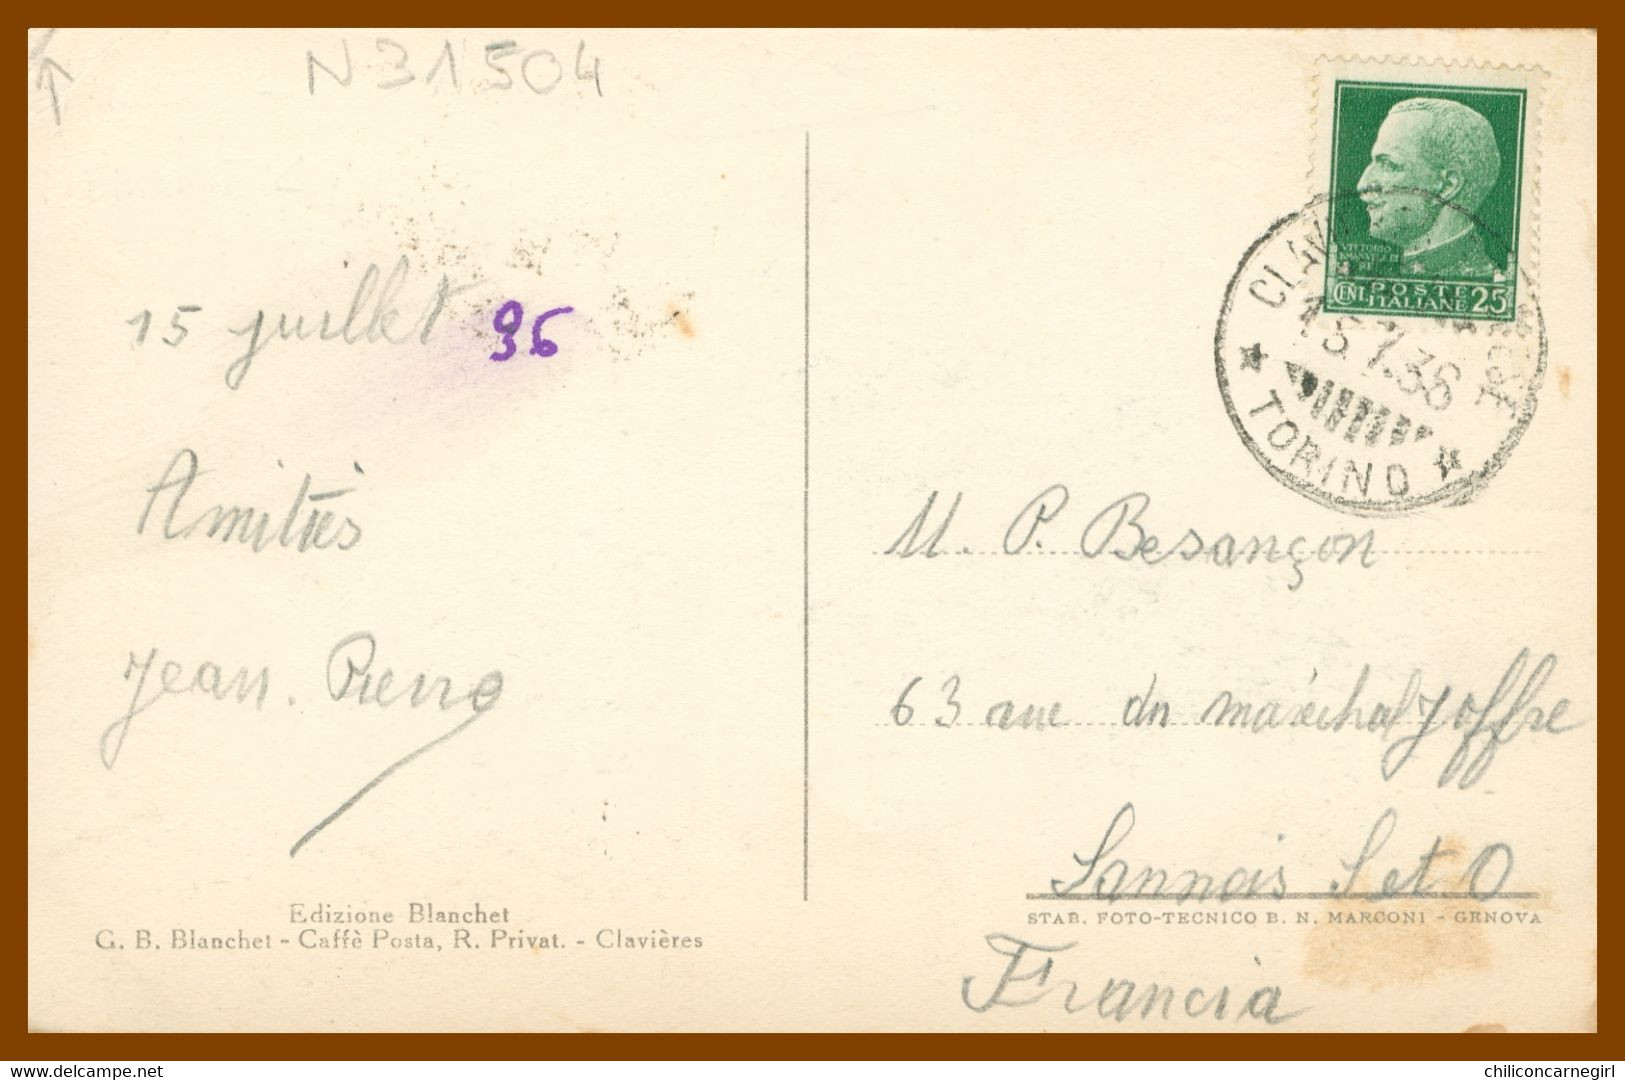 CLAVIERES - Albergo Savoia - Edit. BLANCHET Caffé Posta R. Privat. - Foto MARCONI - 1936 - Bares, Hoteles Y Restaurantes